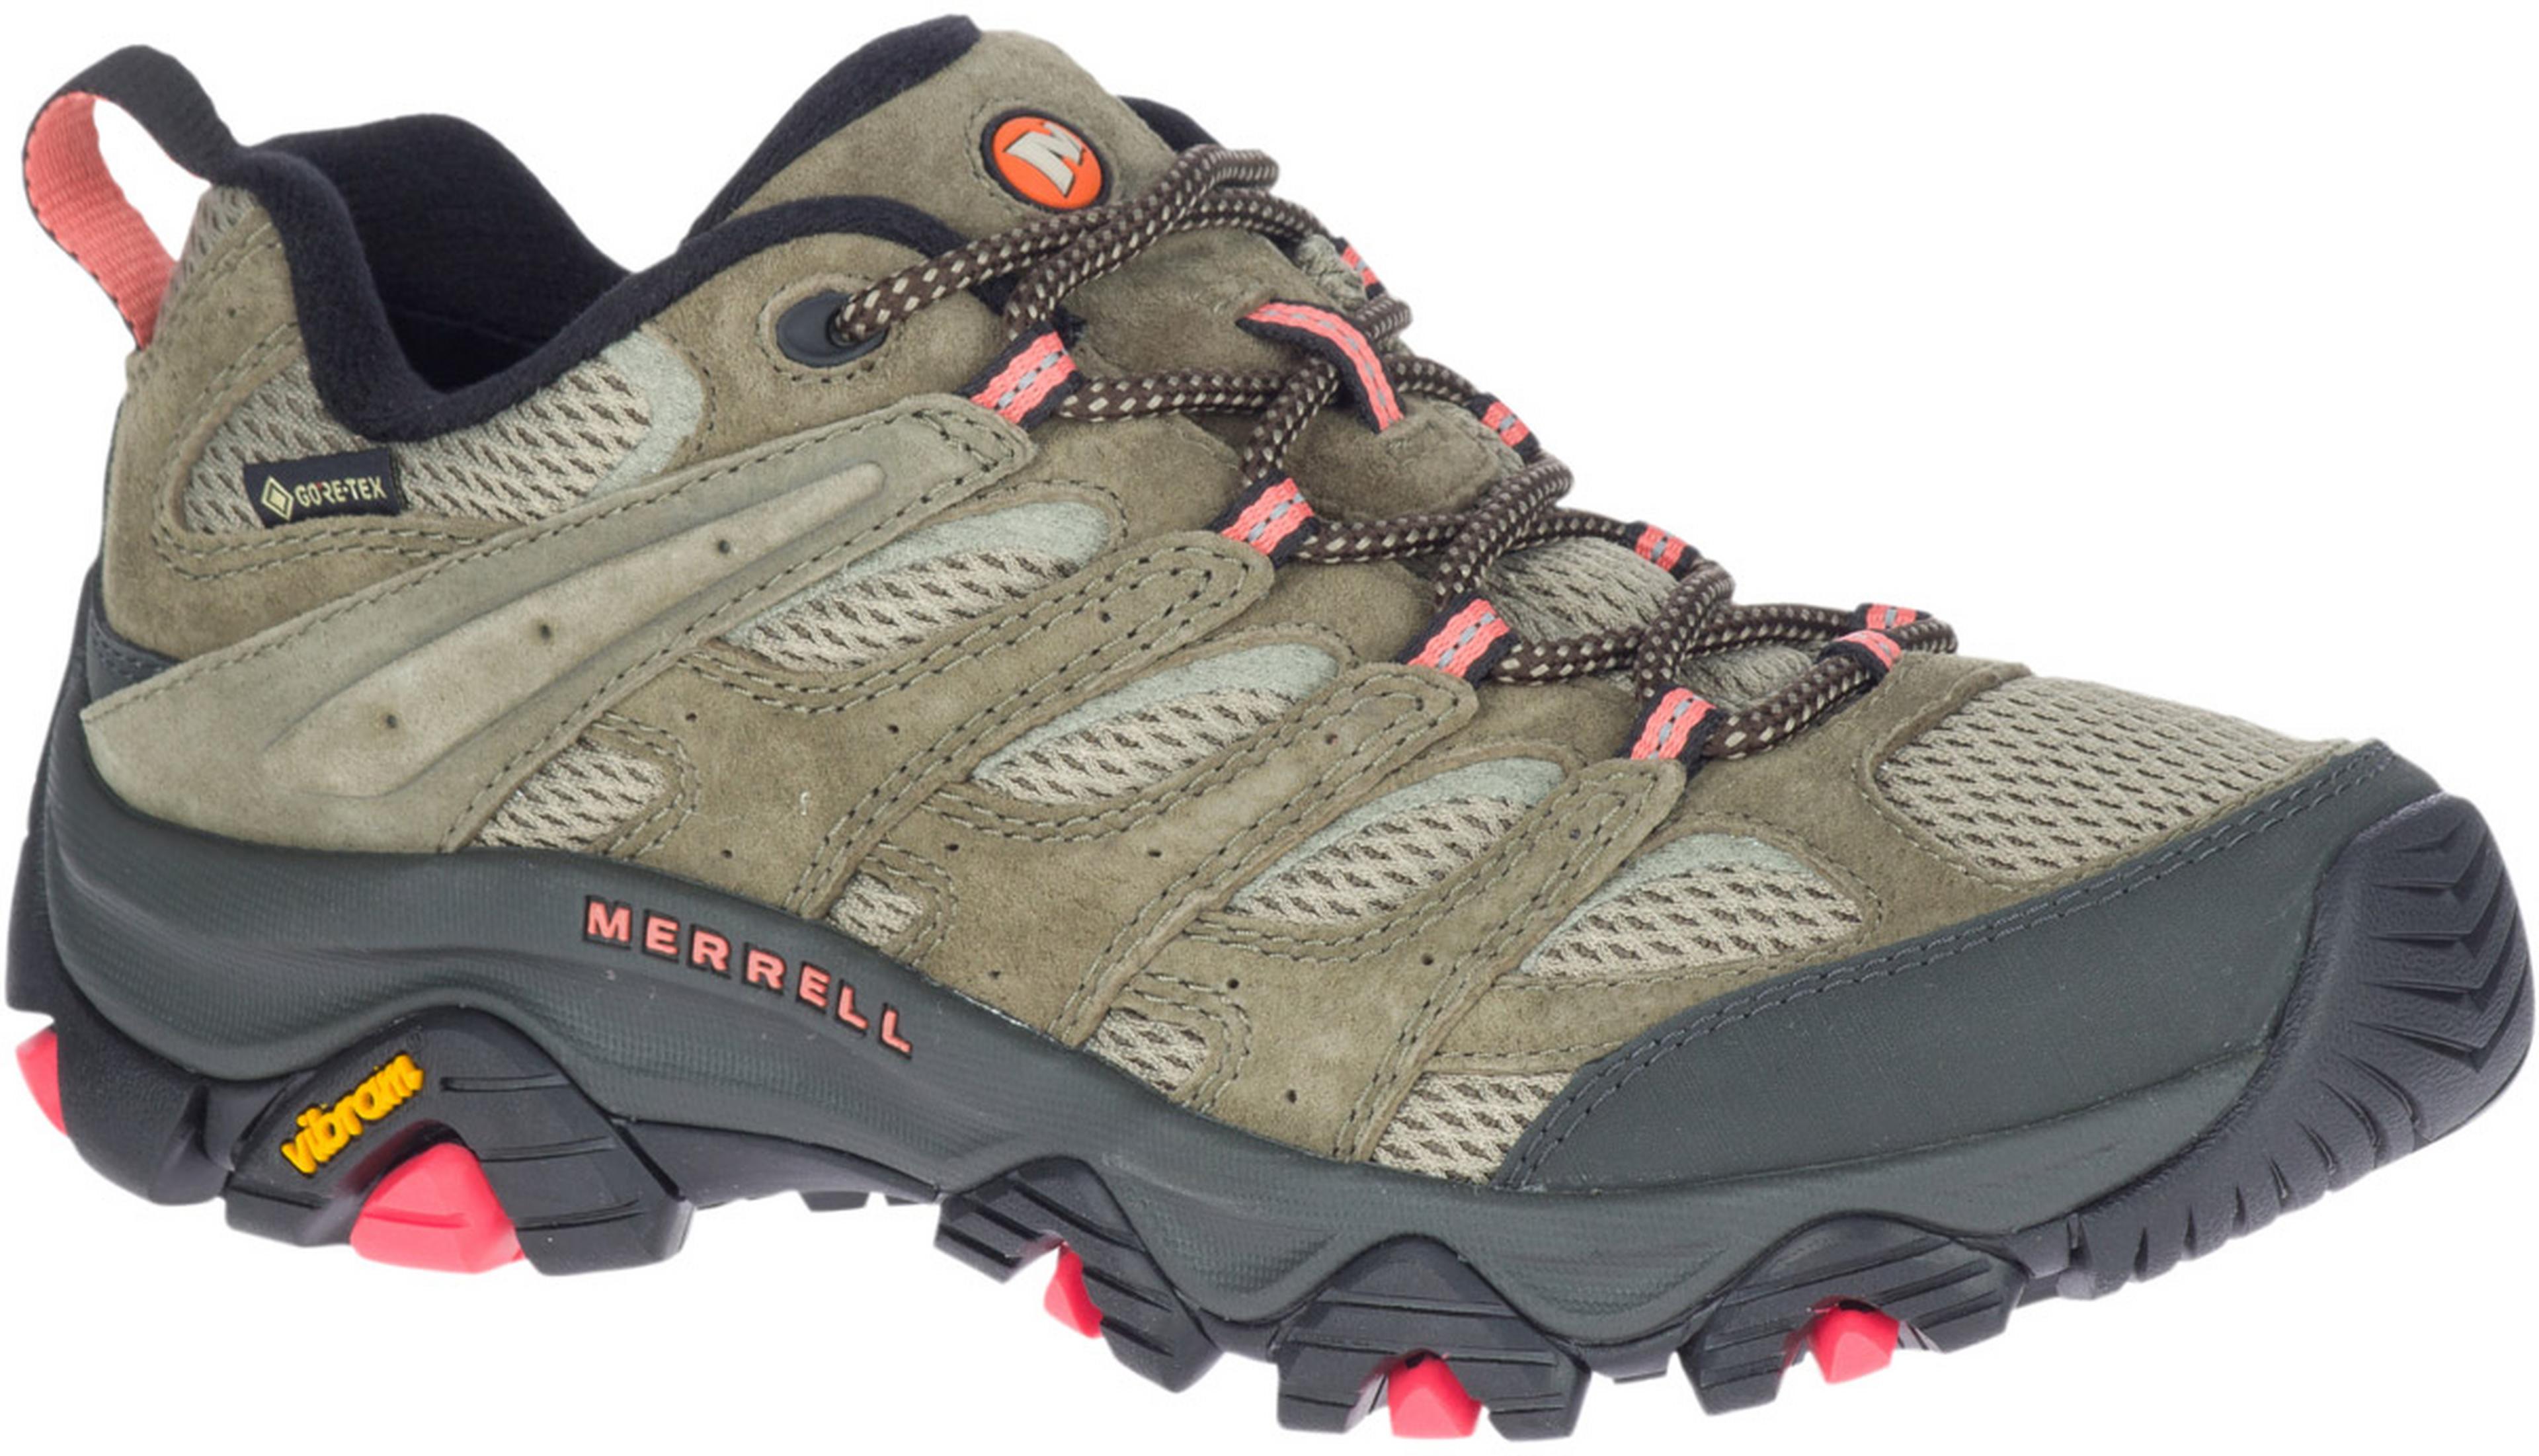 Merrell GORE-TEX Women's Hiking Footwear